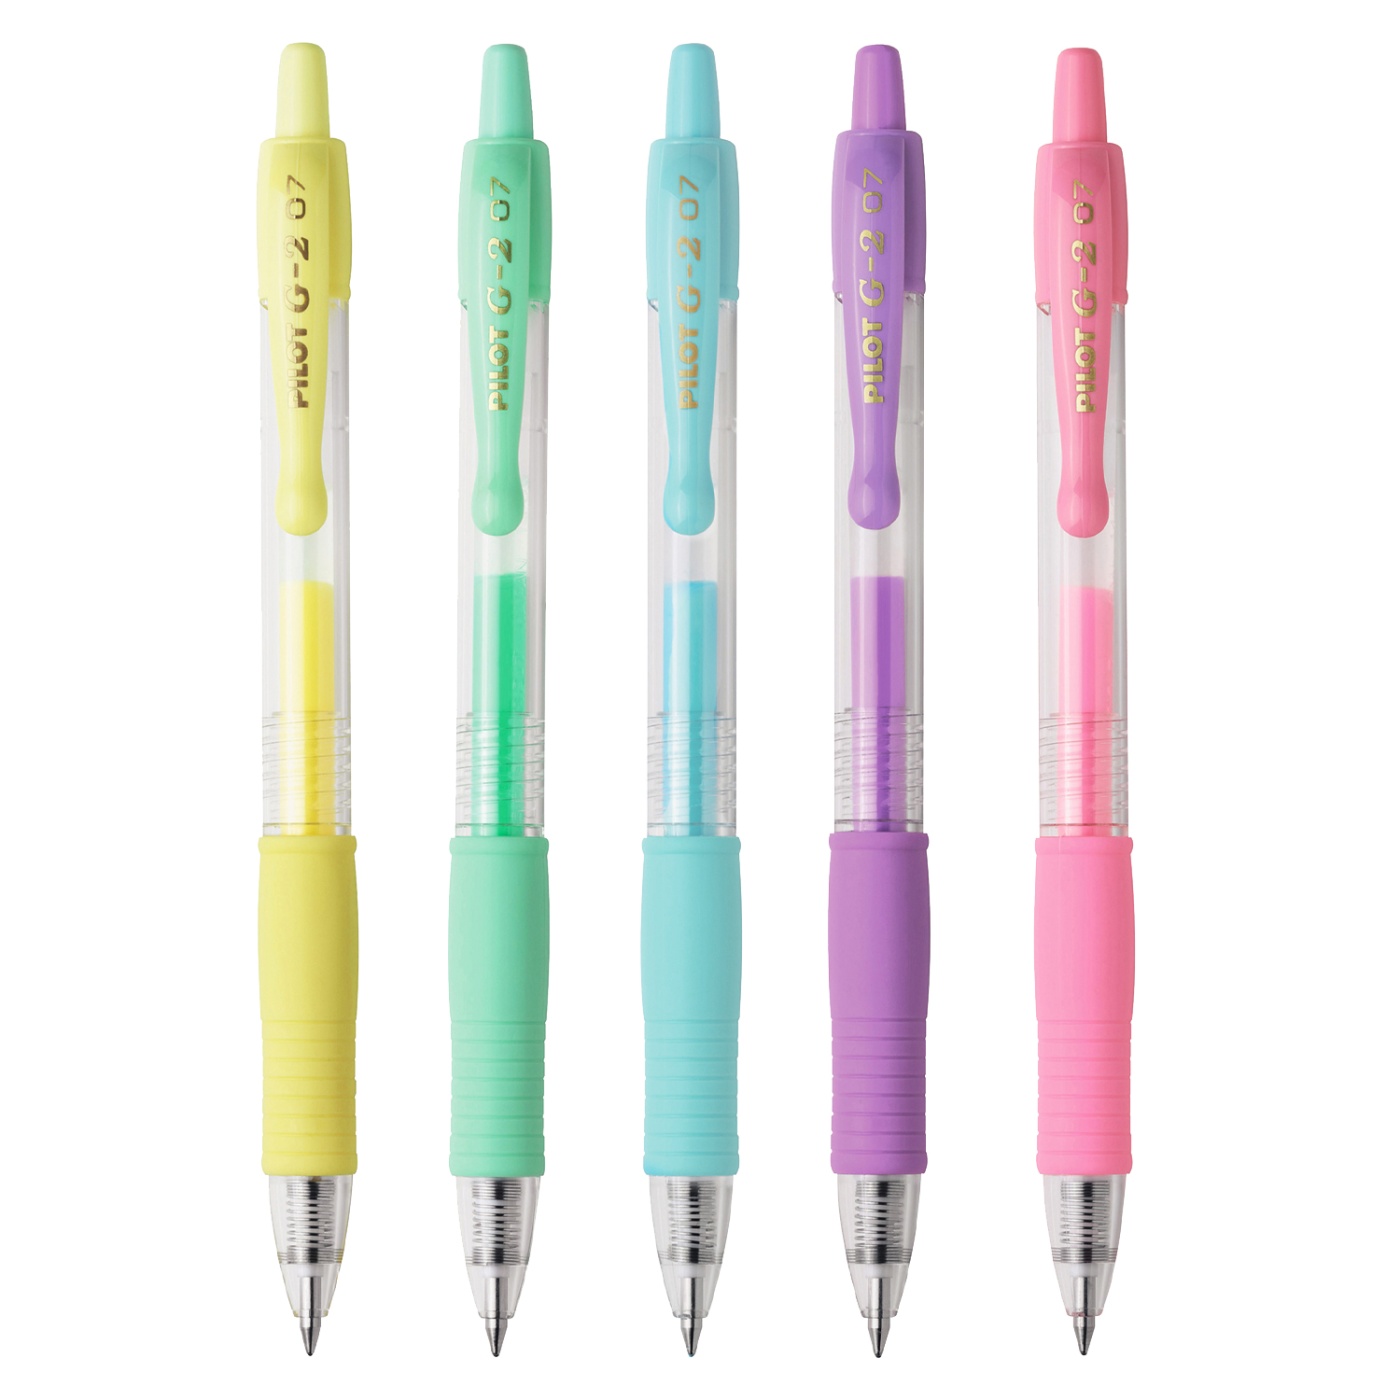 G2 Gel 0.7 Pastel in the group Pens / Writing / Gel Pens at Pen Store (109115_r)